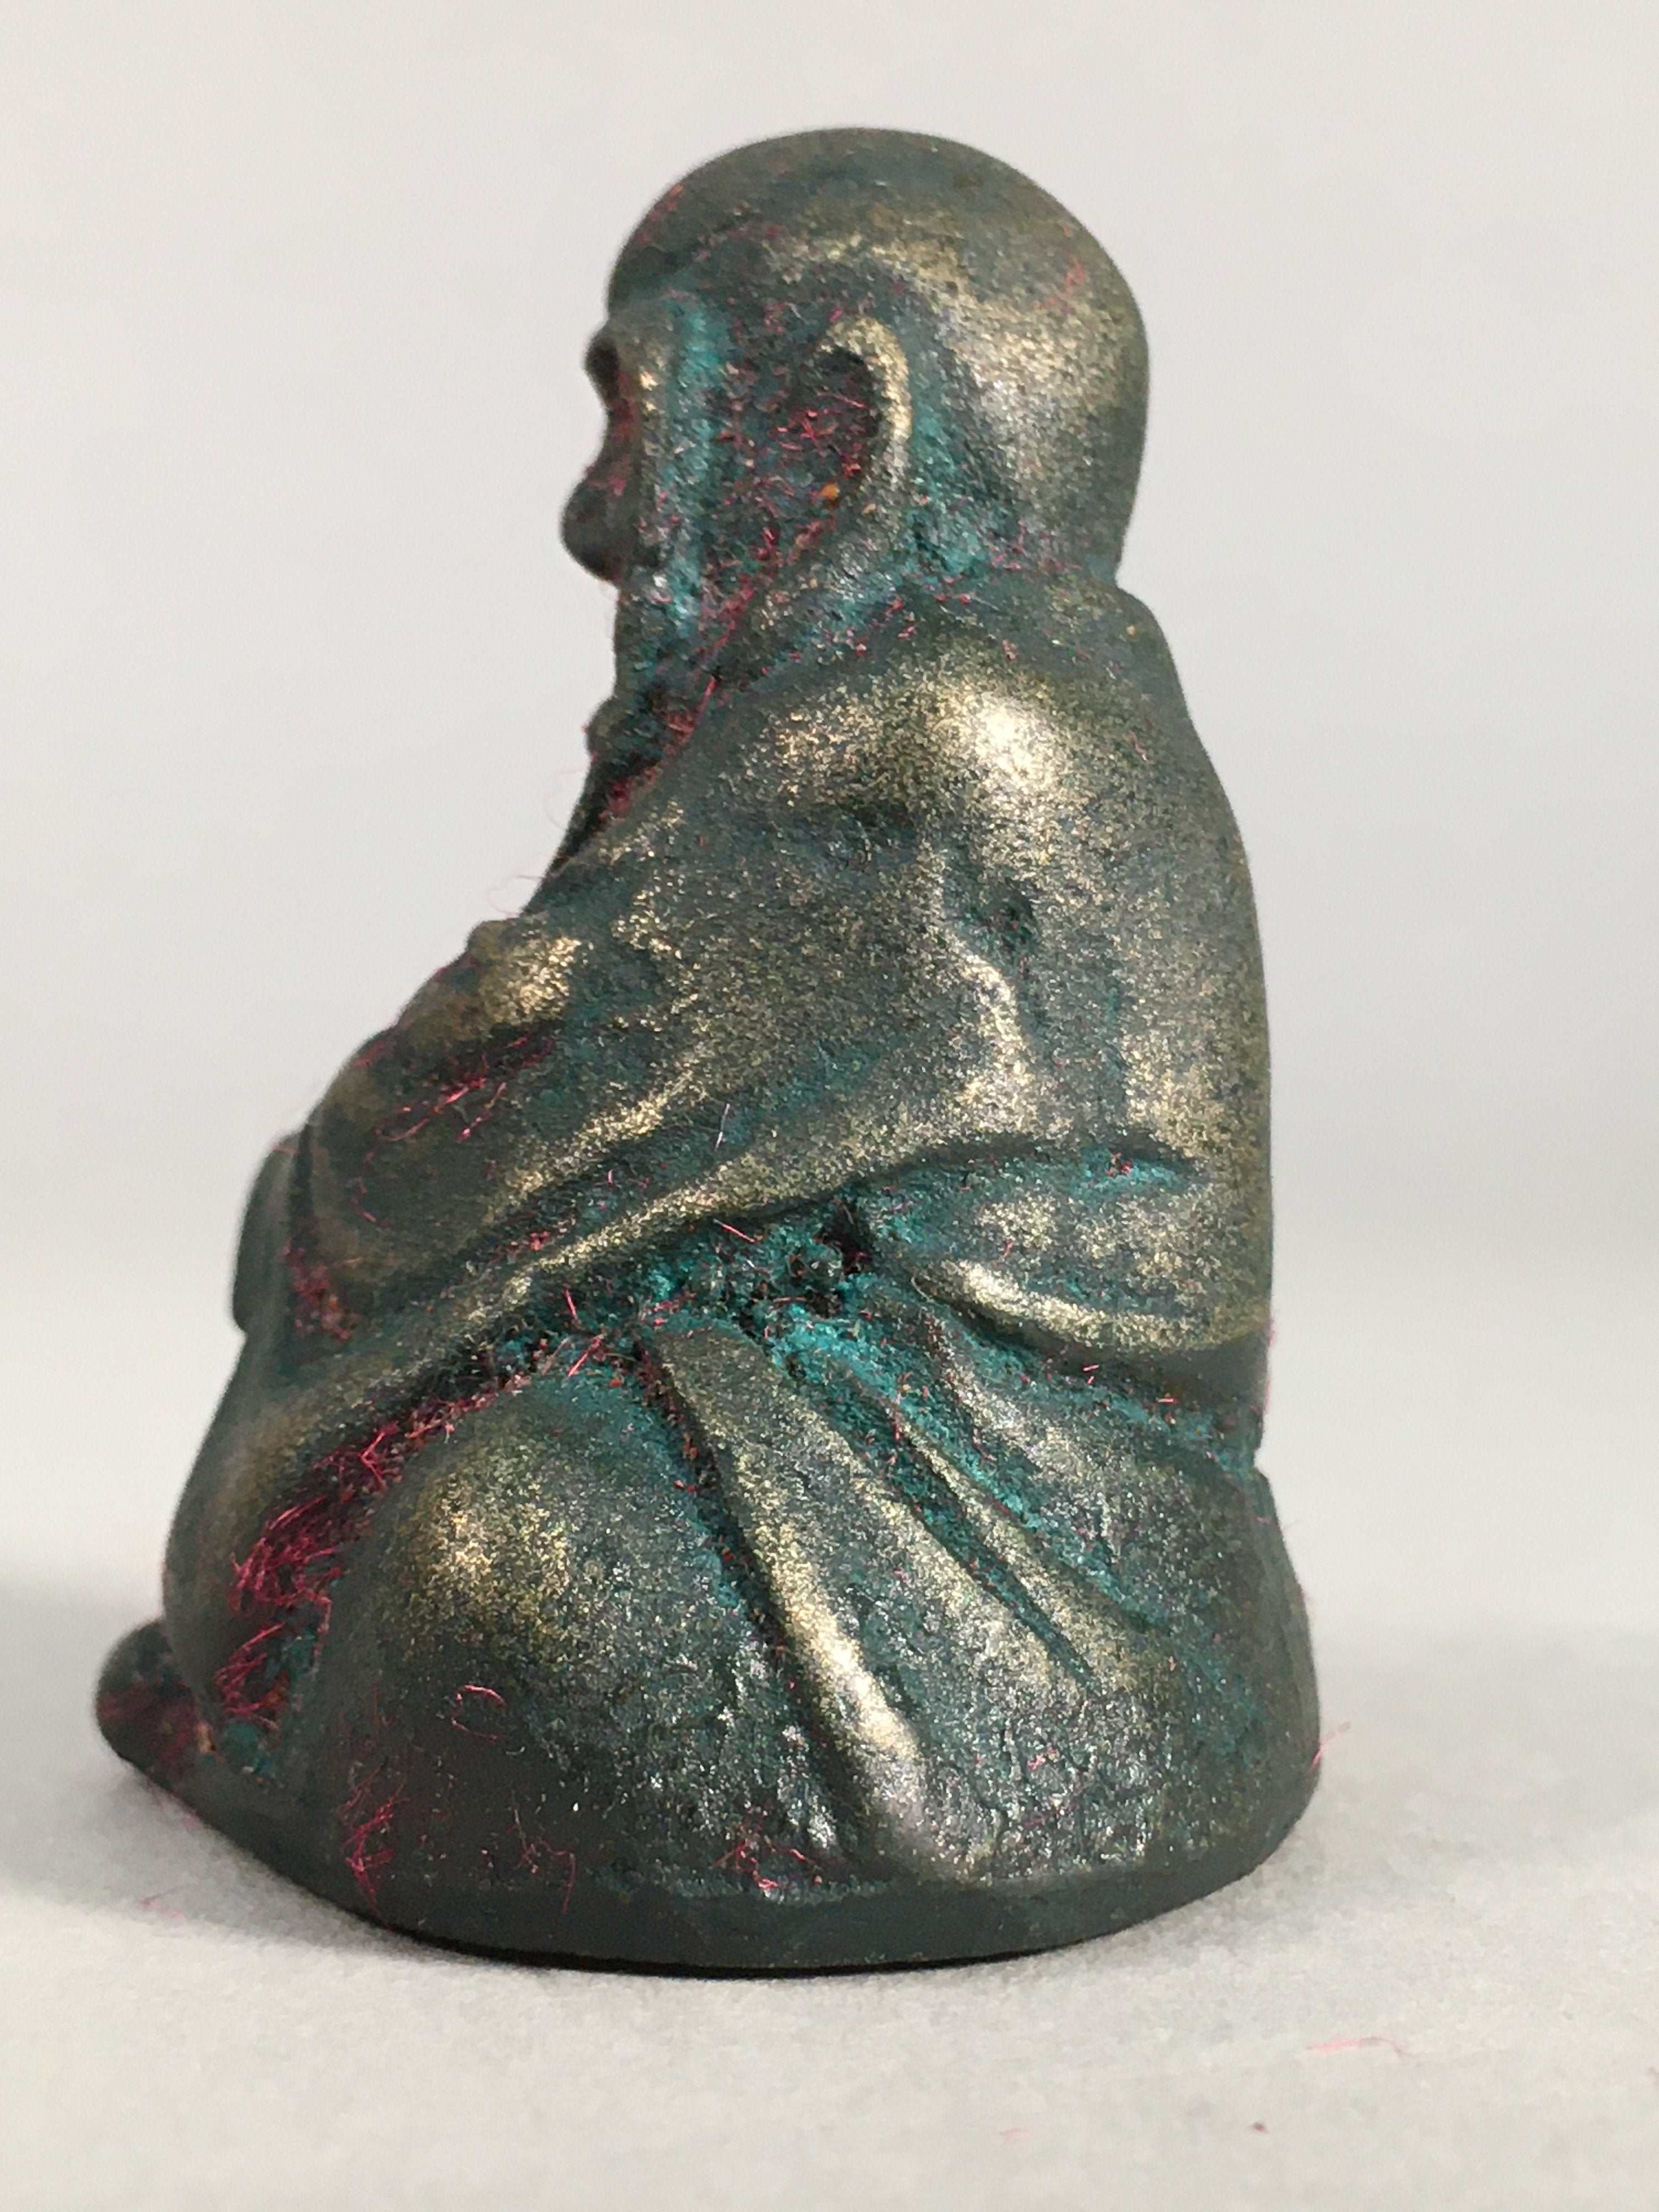 Chinese Iron Figurine Vtg Buddhist Monk Metal Okimono Statue KF438